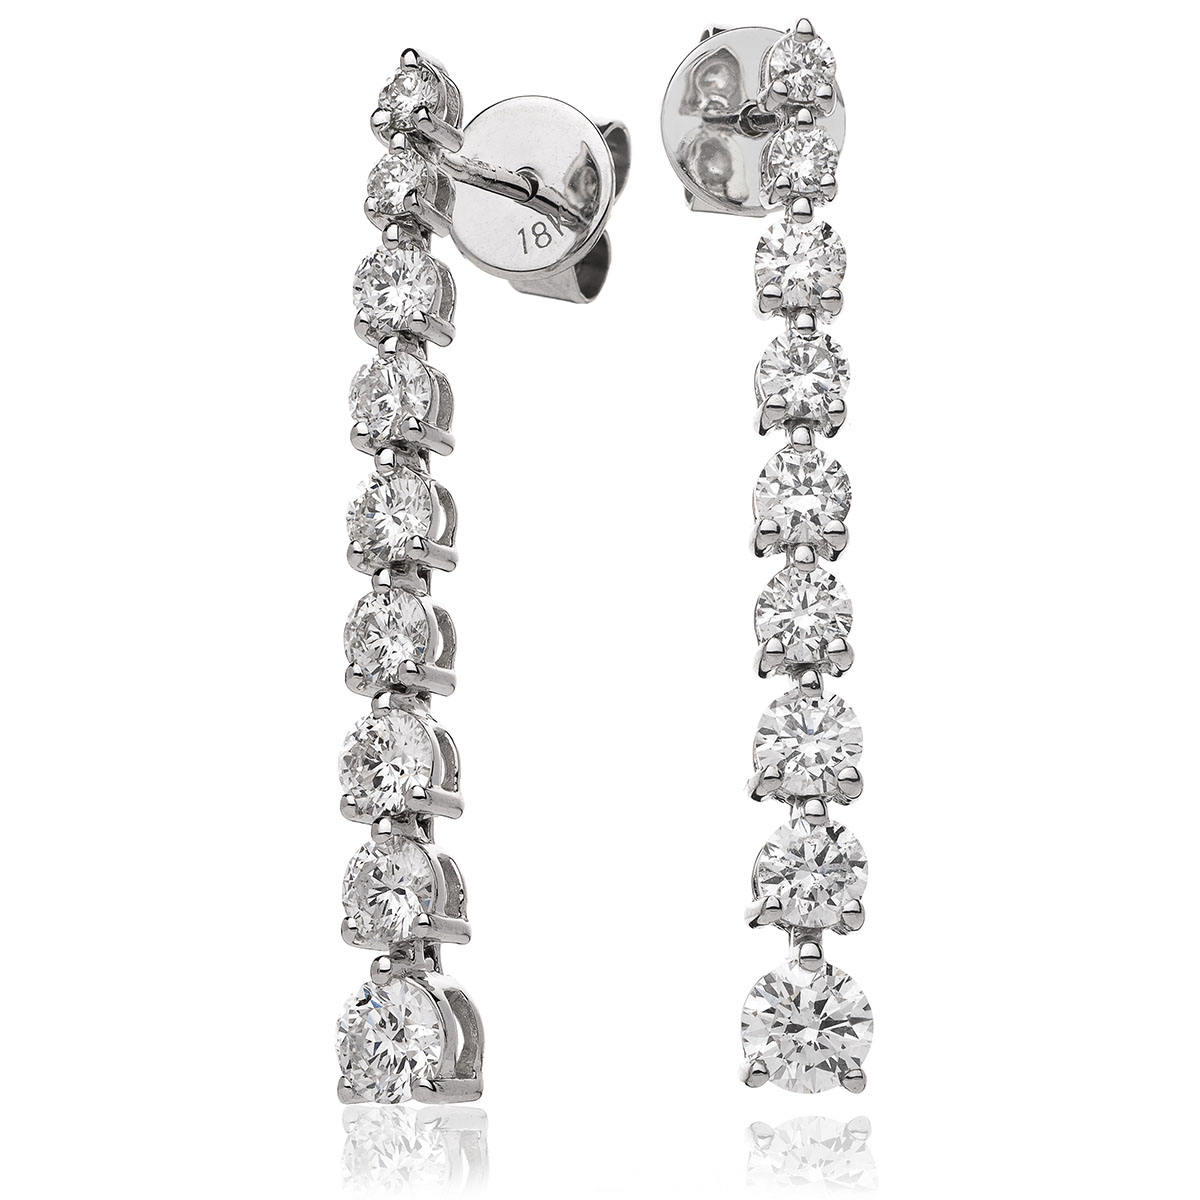 How to choose diamond earrings